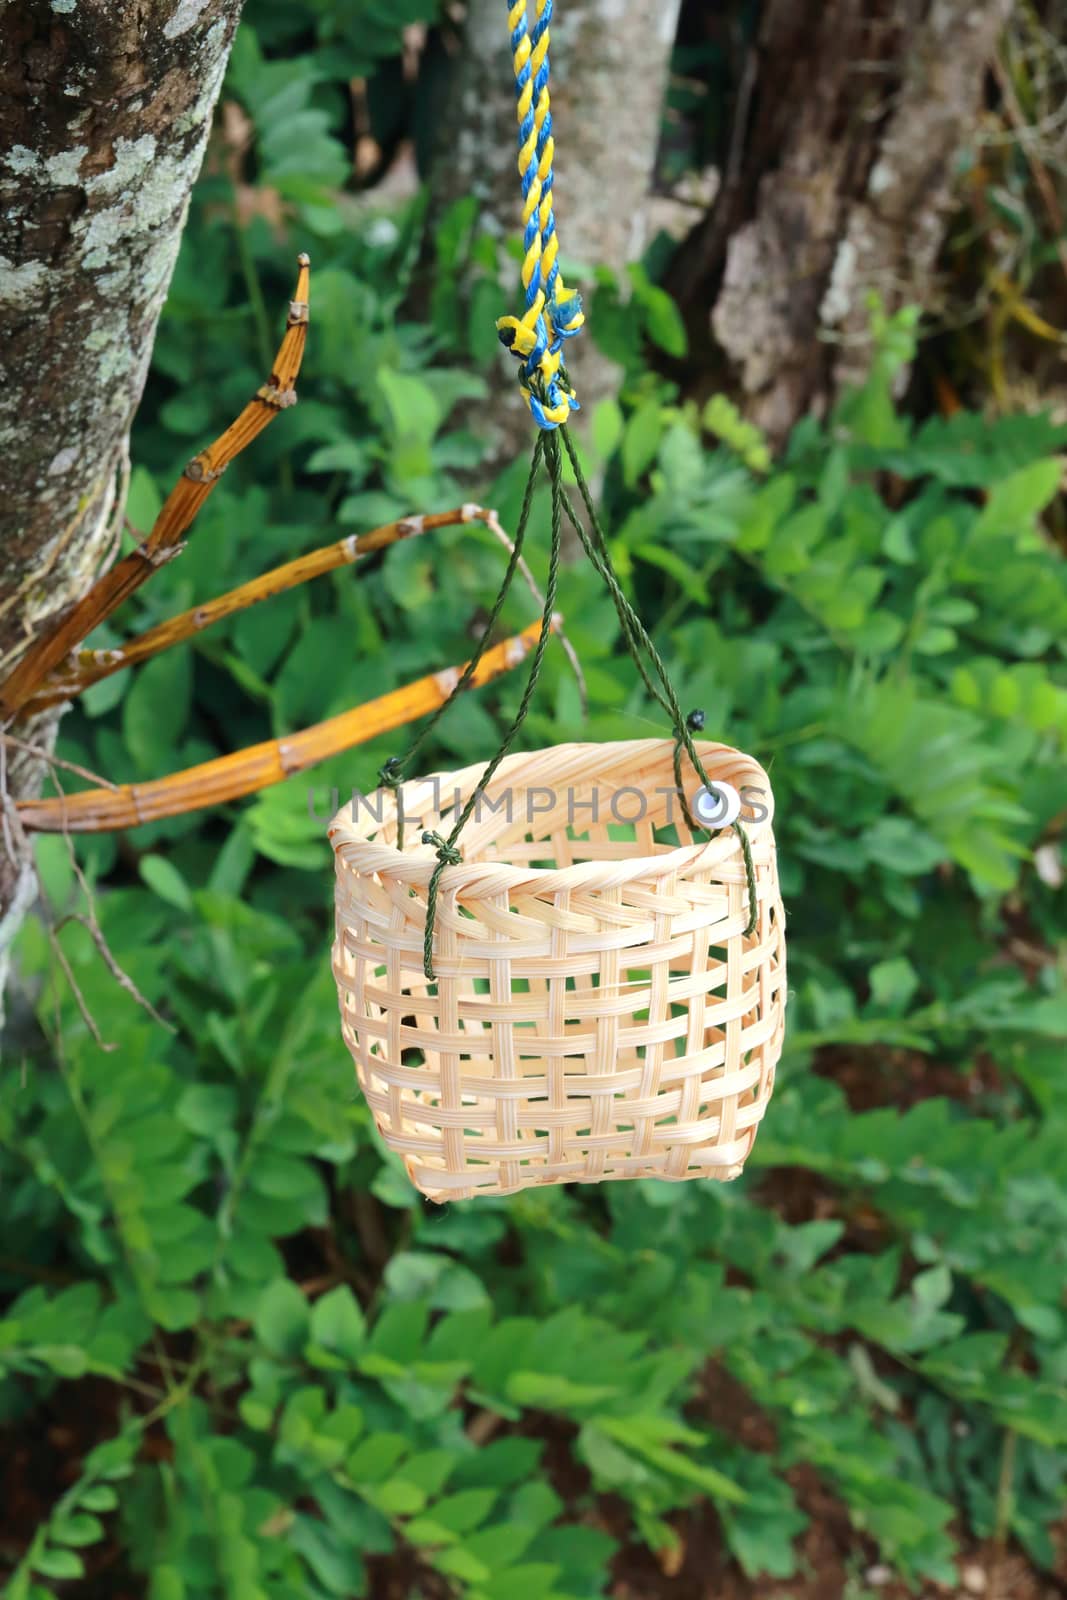 Basket weave for boiled eggs by kaidevil